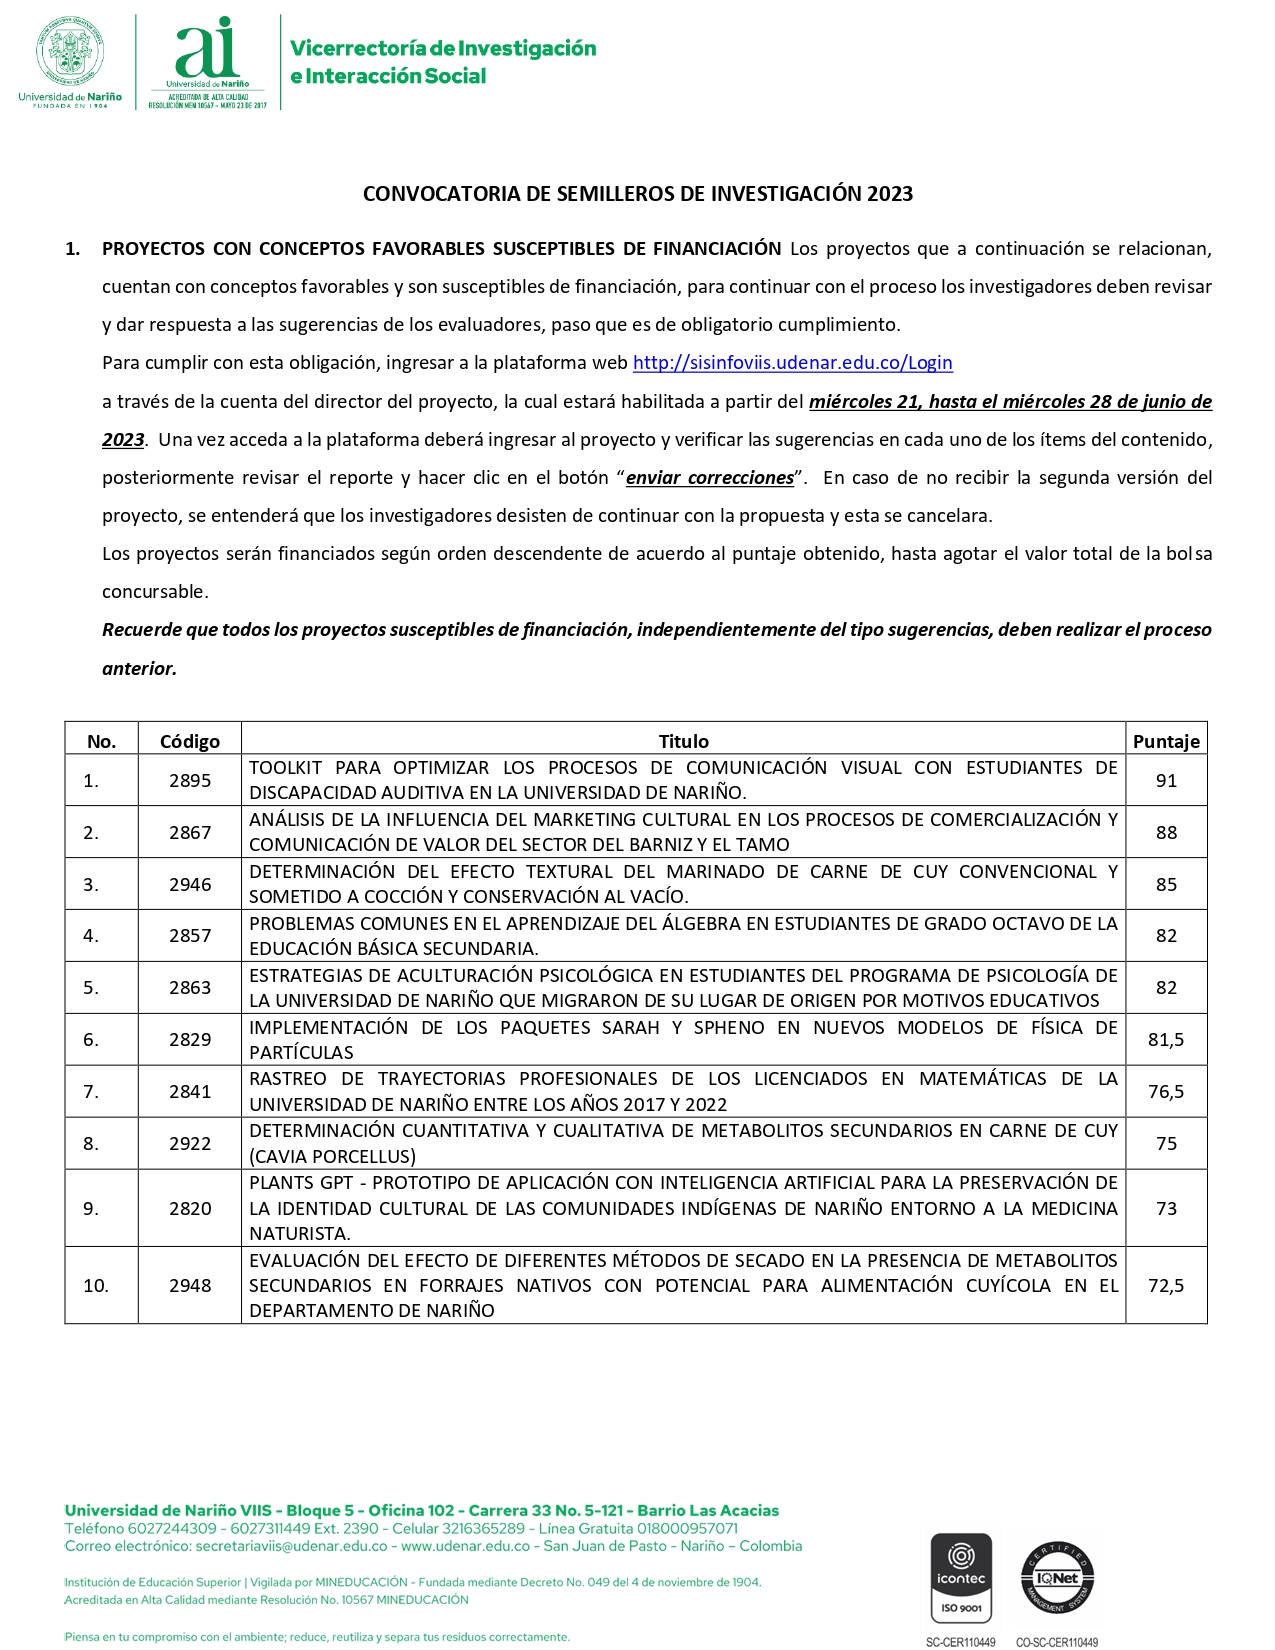 UDENAR-PERIODICO-COMUNICADO-003-CONVOCATORIAS-DE-INVESTIGACION-2_page-0007